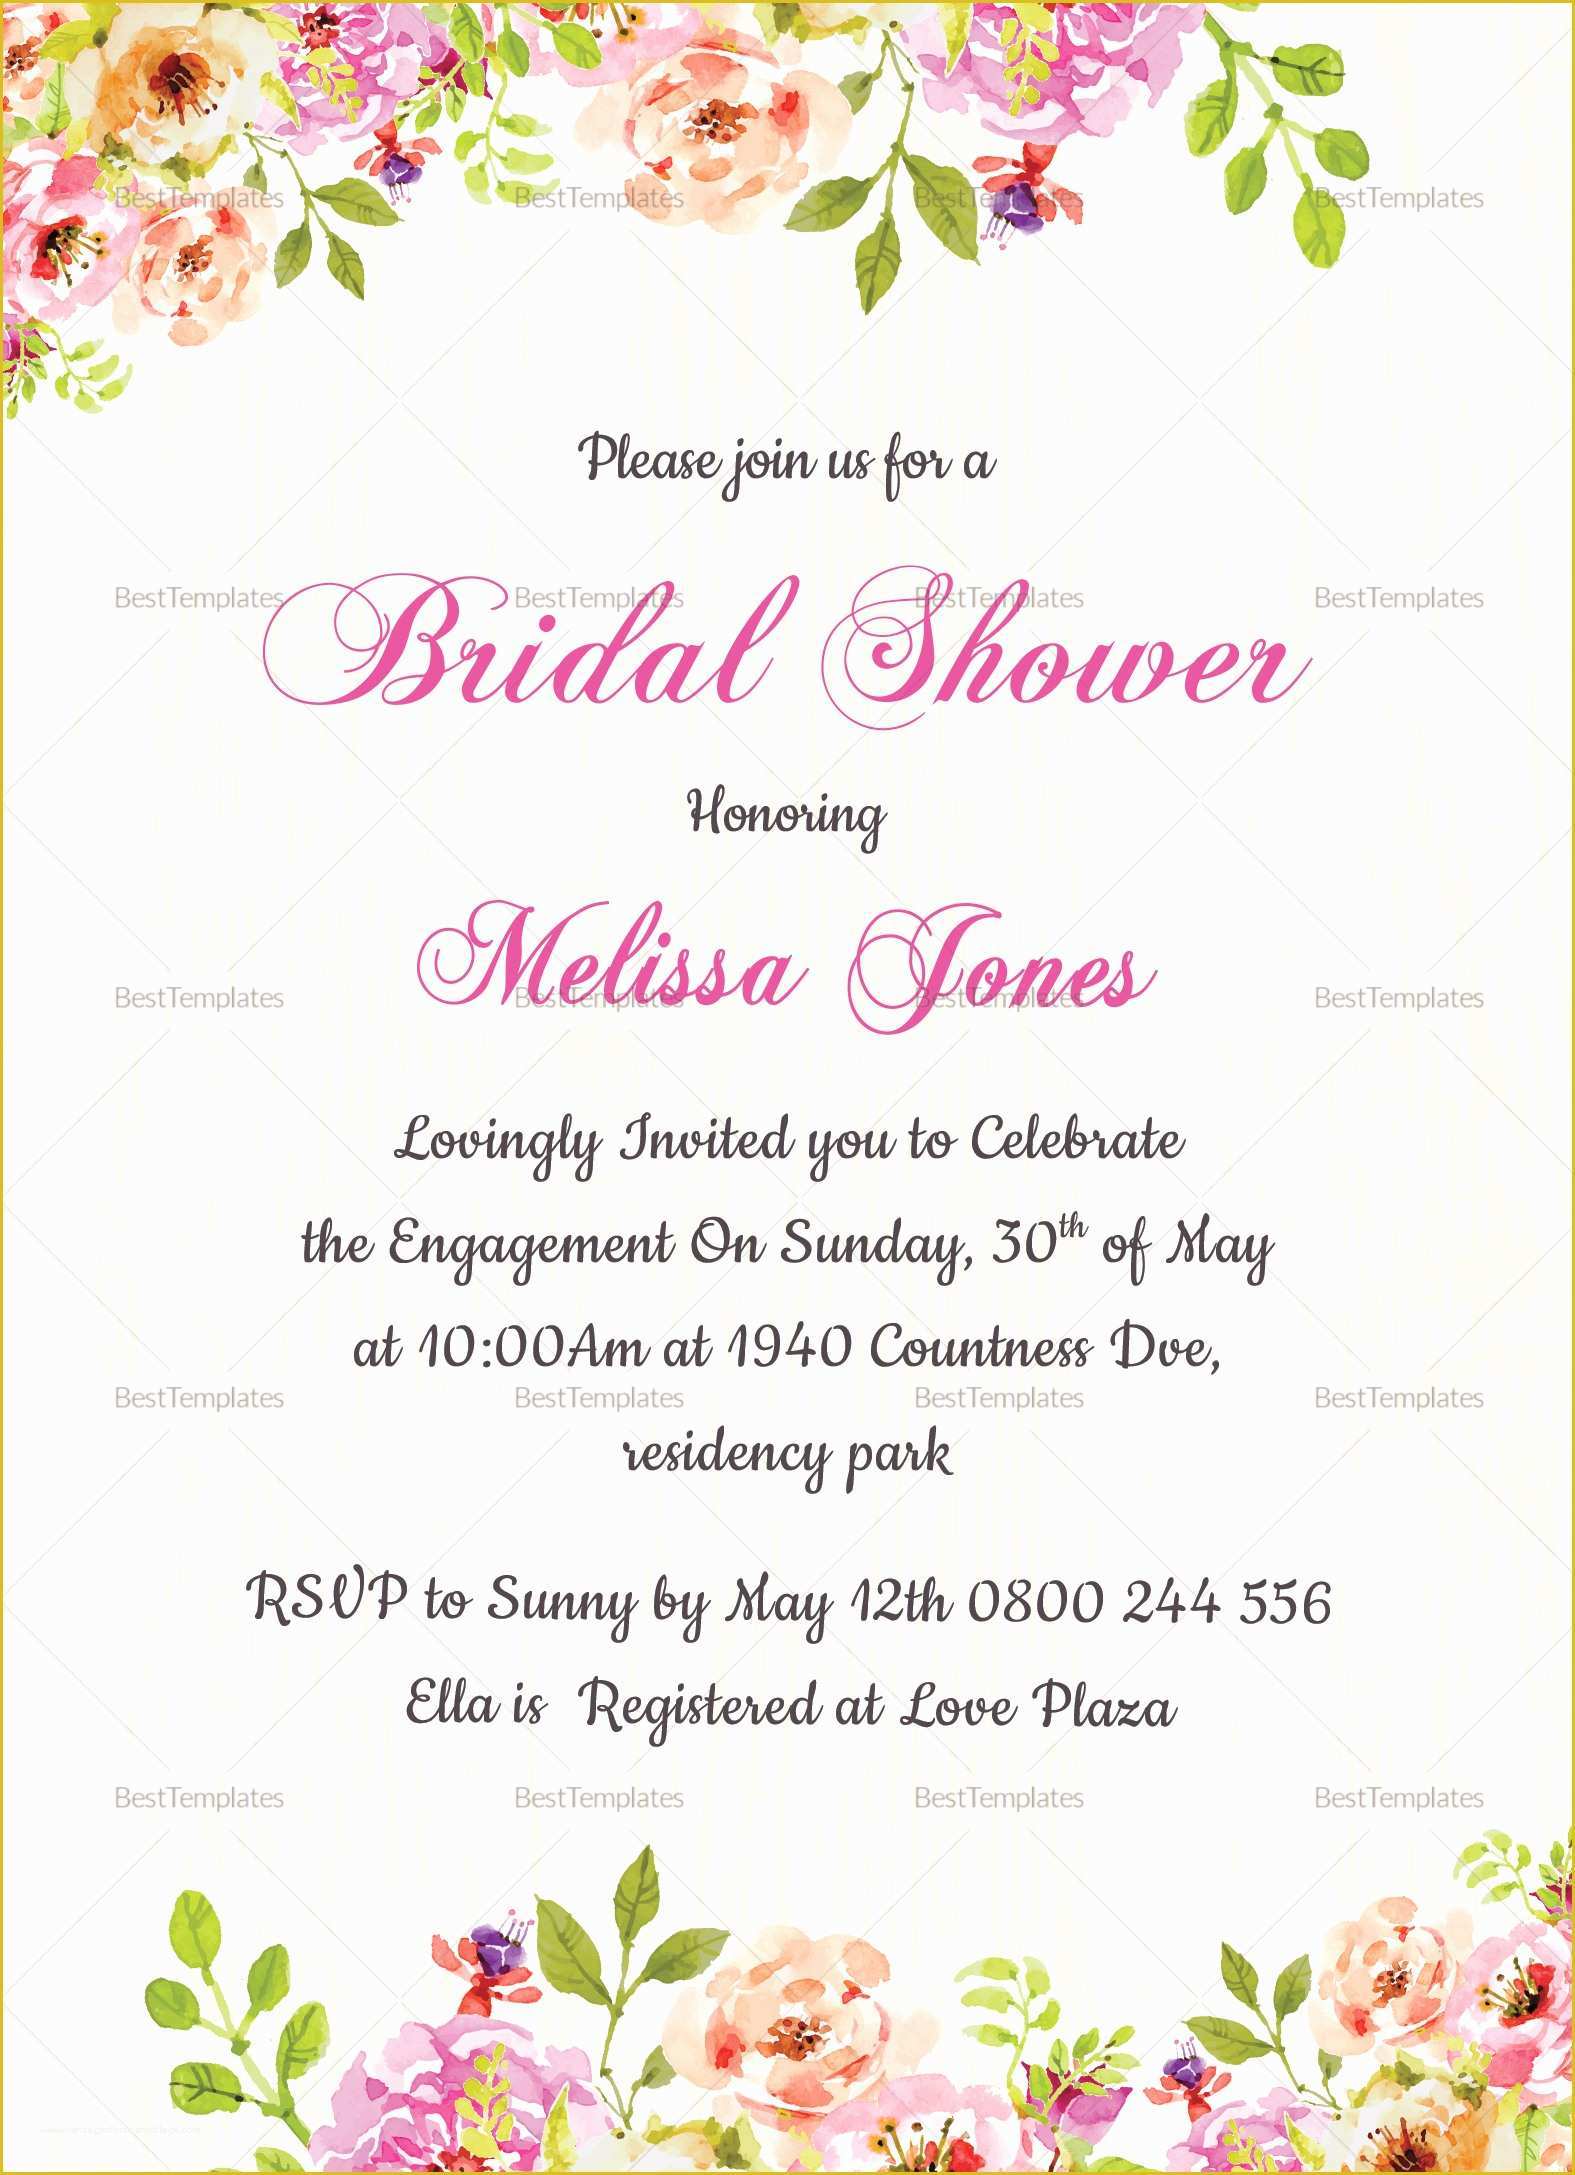 free-bridal-shower-invitation-templates-for-word-of-floral-bridal-shower-invitation-card-design